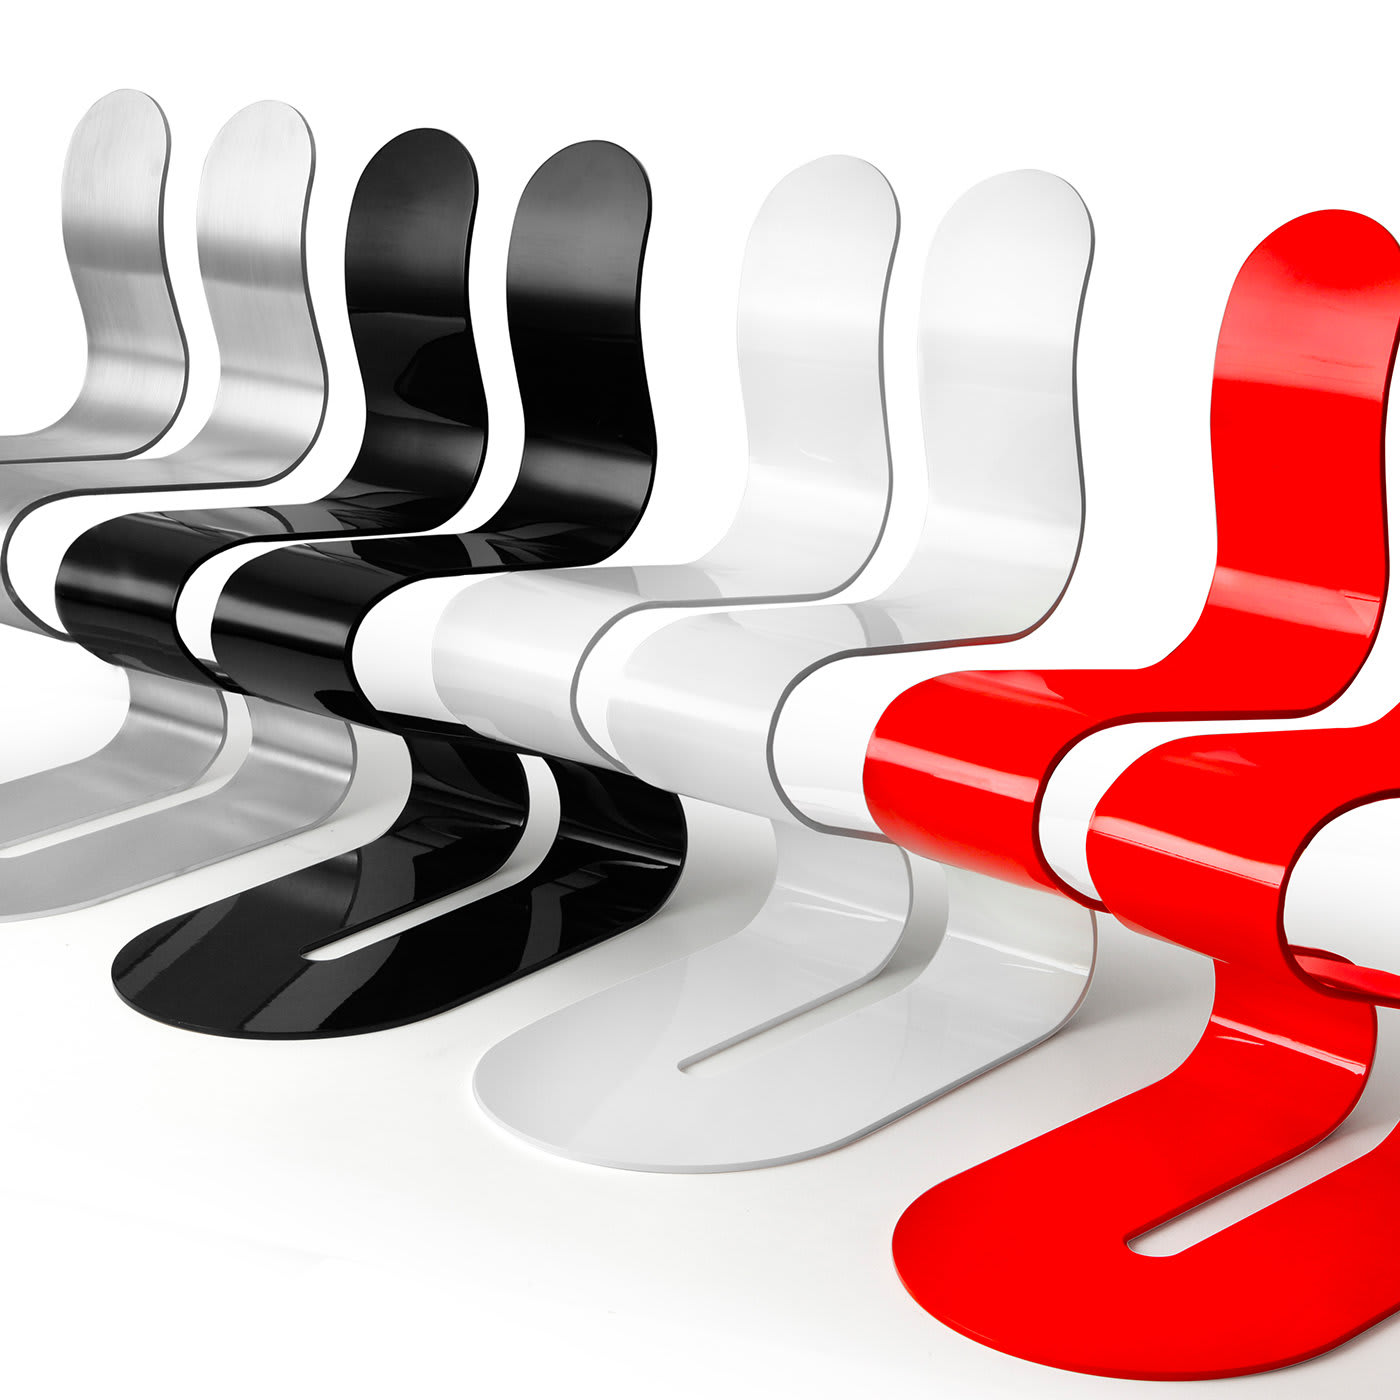 Fluid Ribbon Red Chair by Michael D'Amato - Lamberti Design